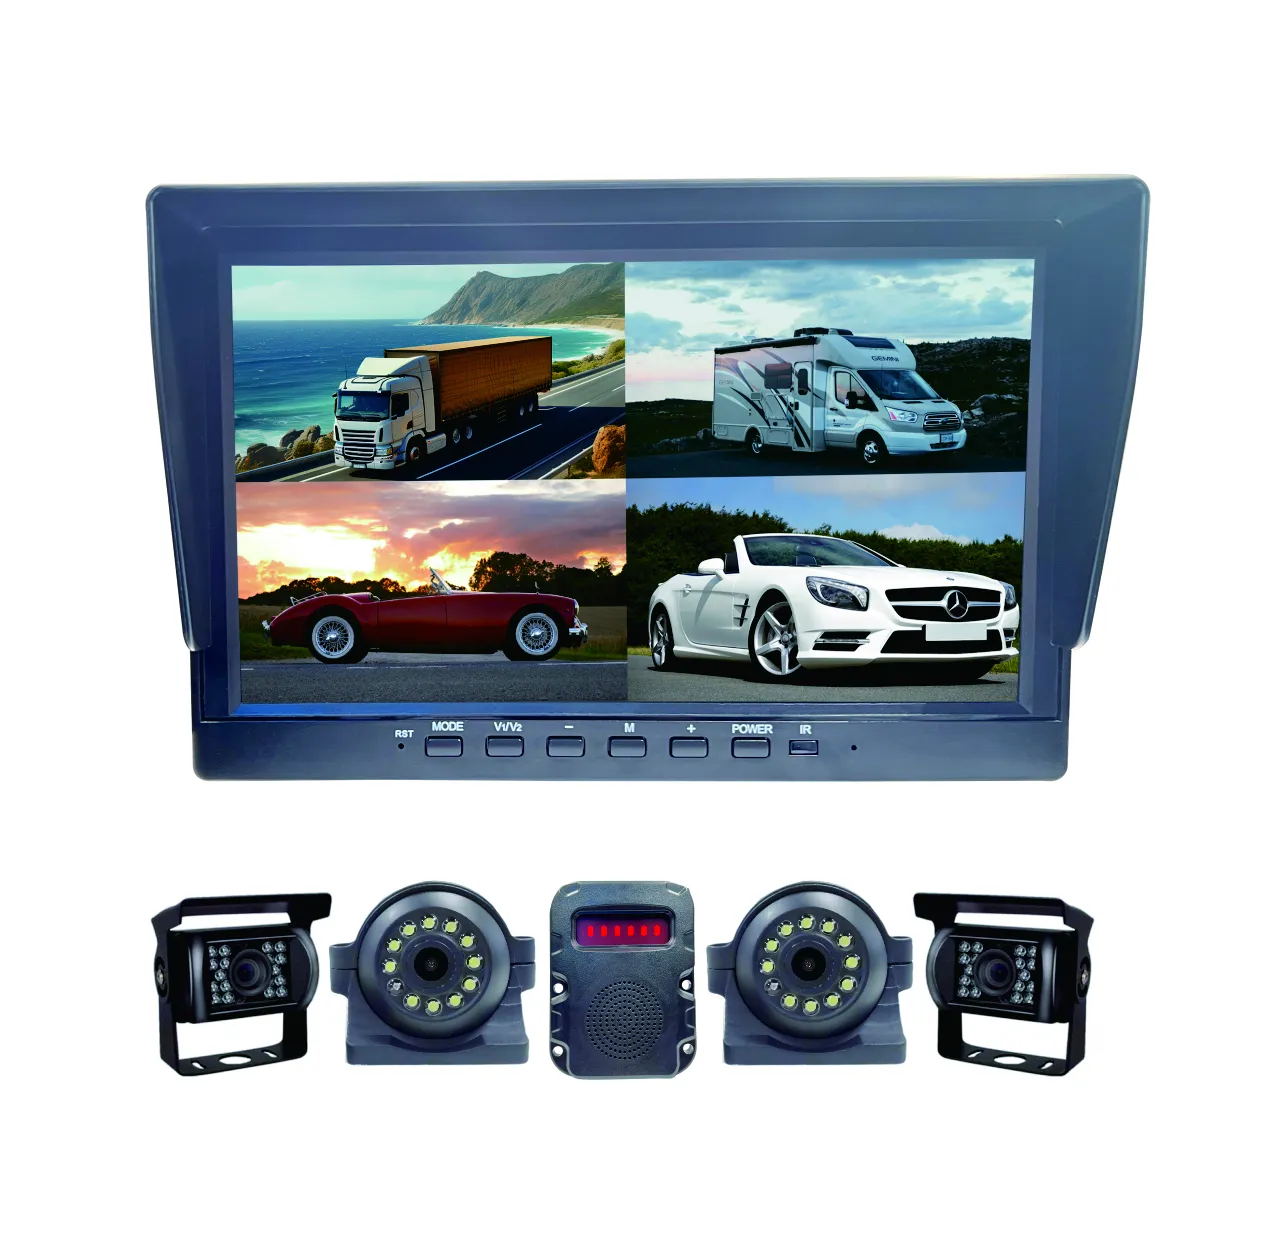 10 inch HD monitor quad view motion detect alarm car truck bus cars reversing image display dash camera system